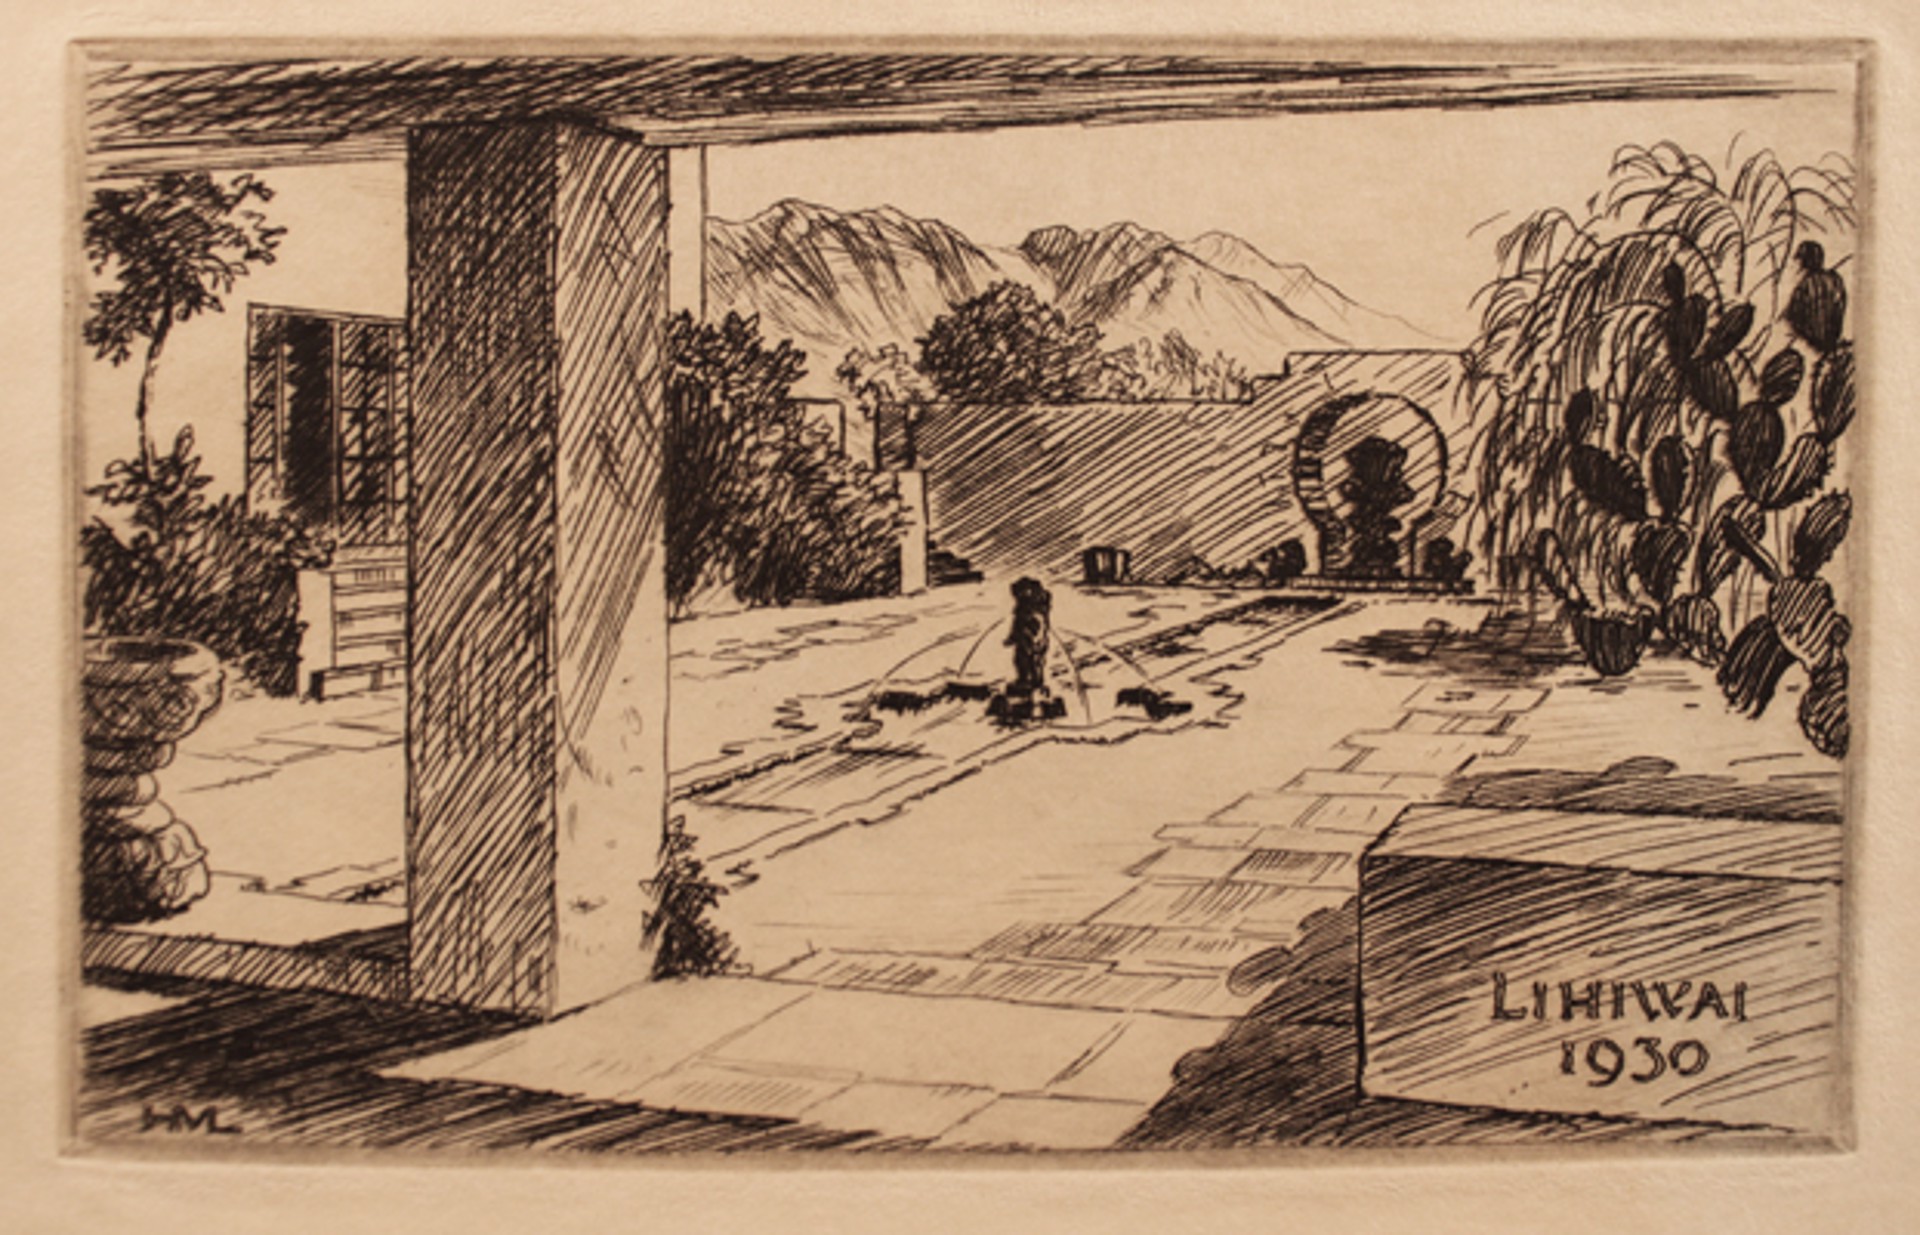 Lihiwai, 1930 by Huc Mazelet Luquiens